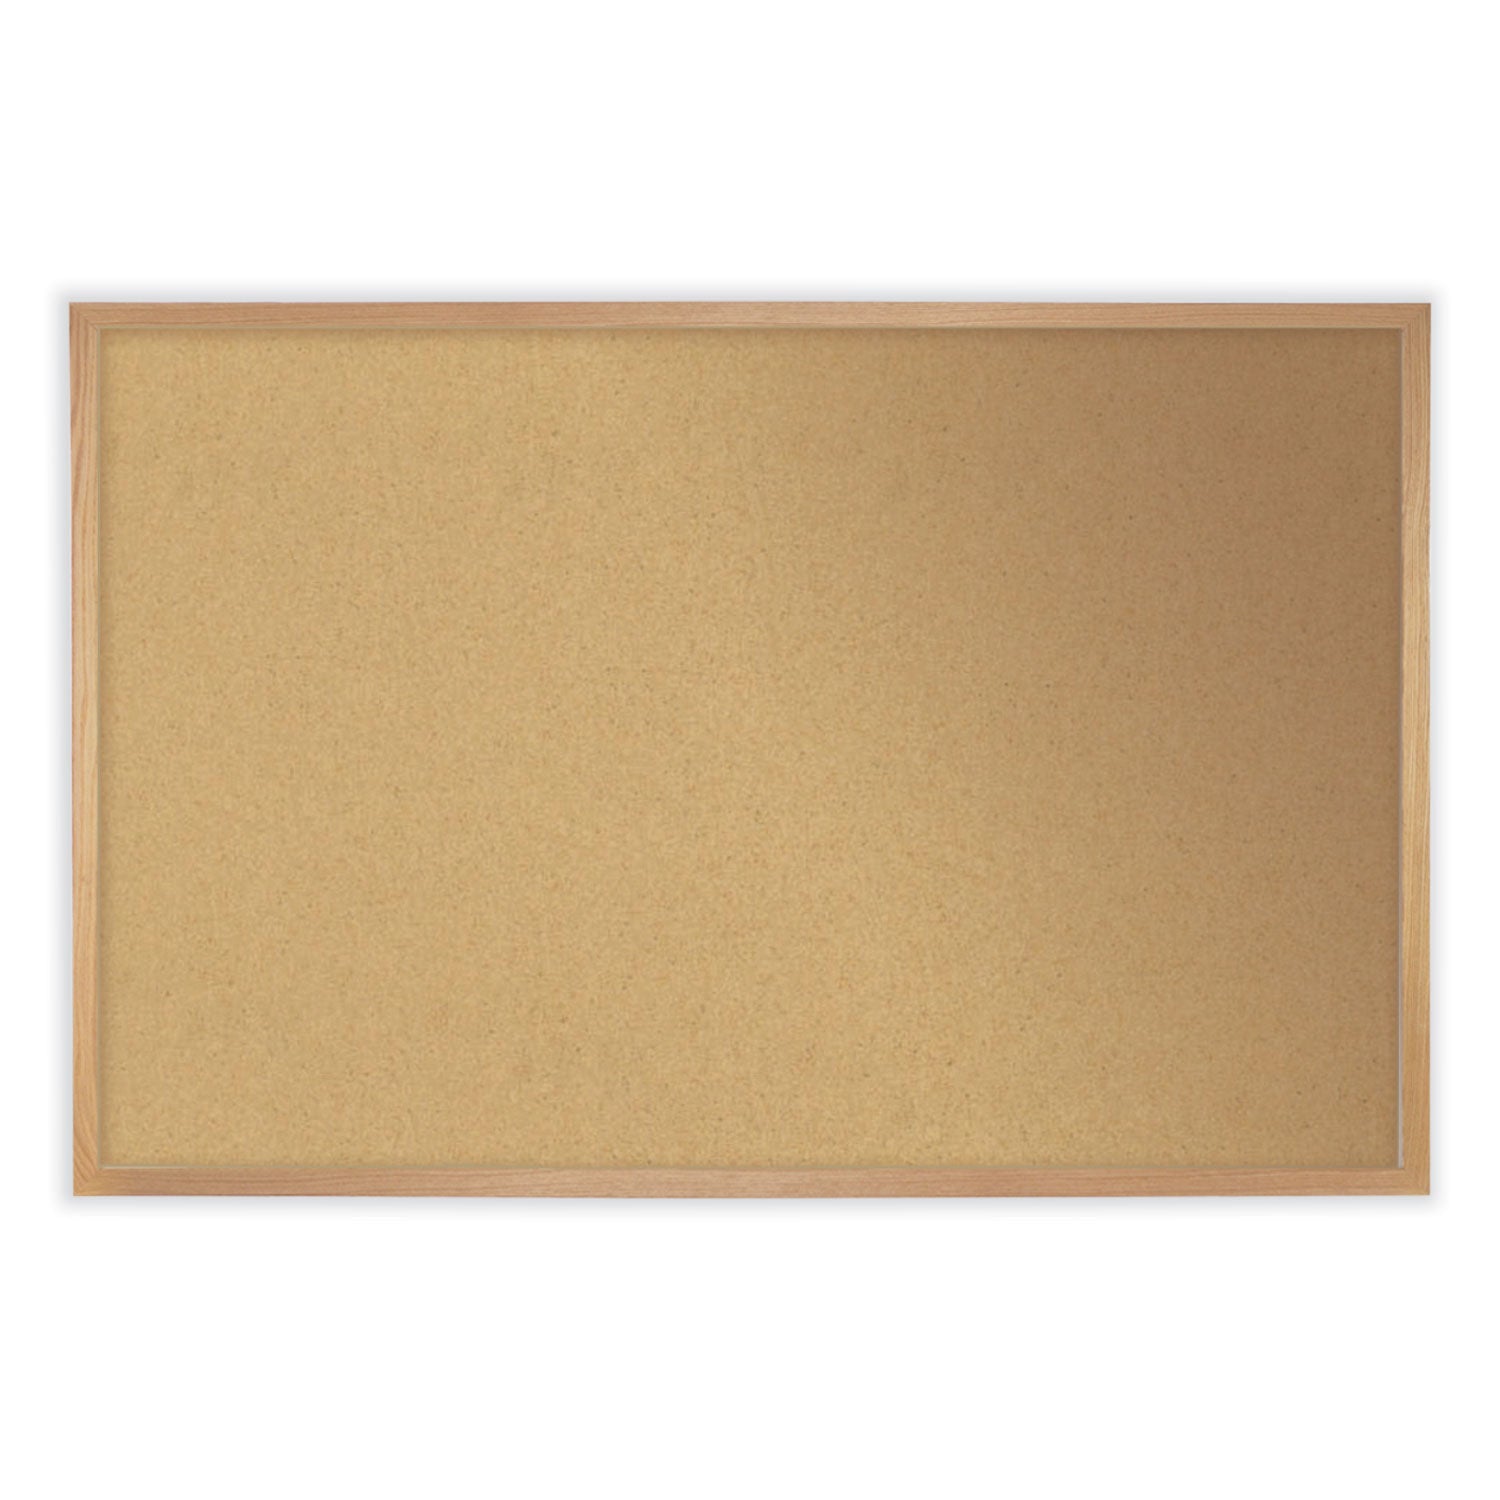 natural-cork-bulletin-board-with-frame-605-x-485-tan-surface-oak-frame-ships-in-7-10-business-days_ghewk45 - 1